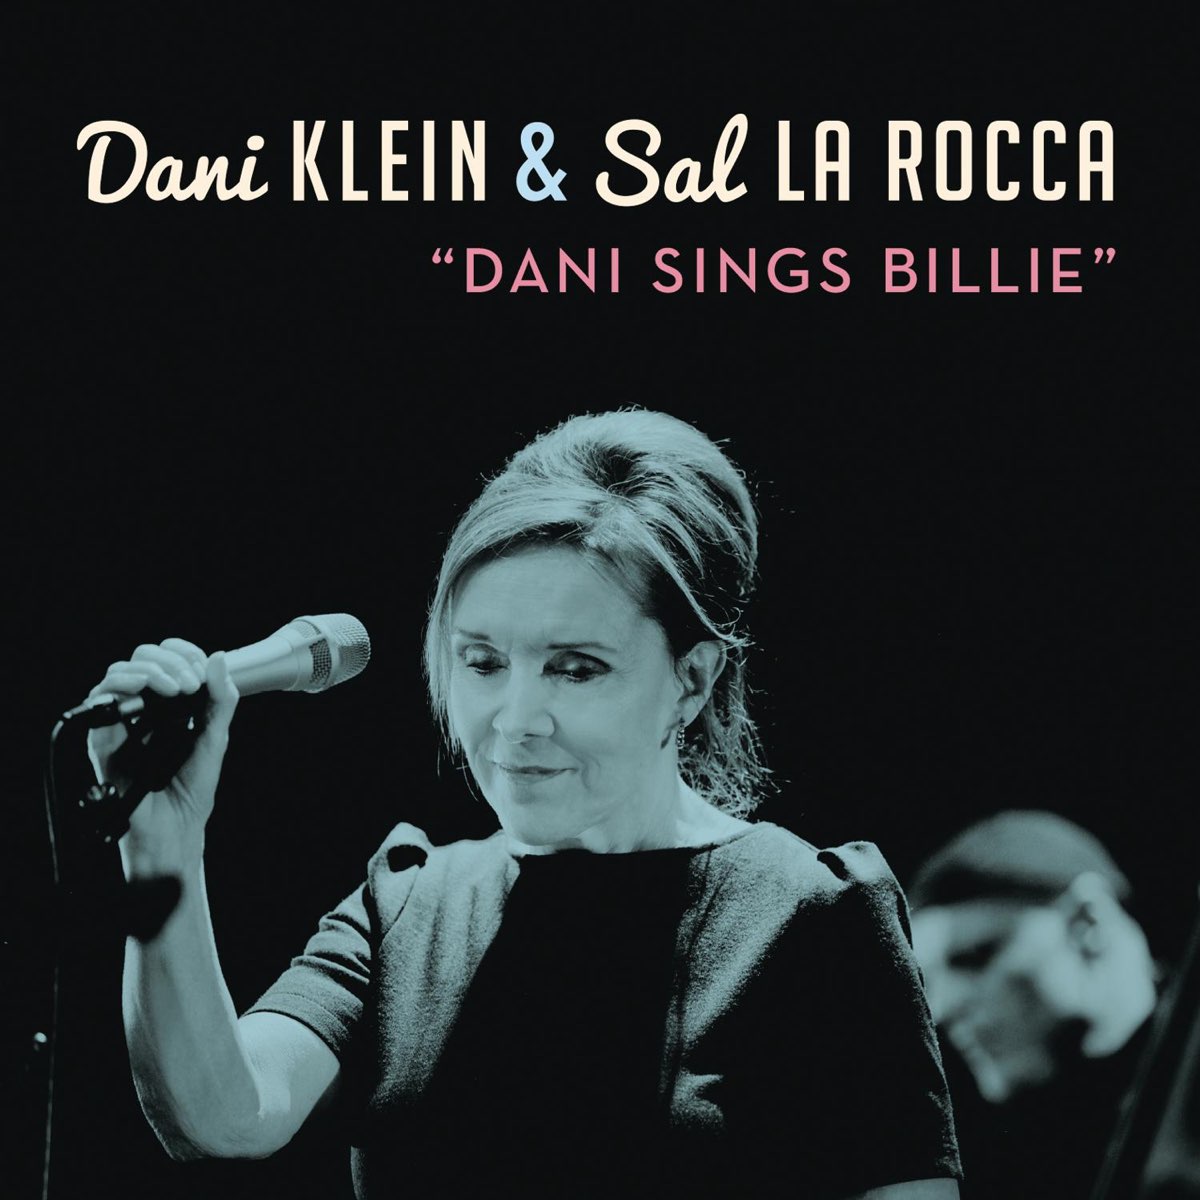 ‎Dani Sings Billie - Album by Dani Klein & Sal La Rocca - Apple Music